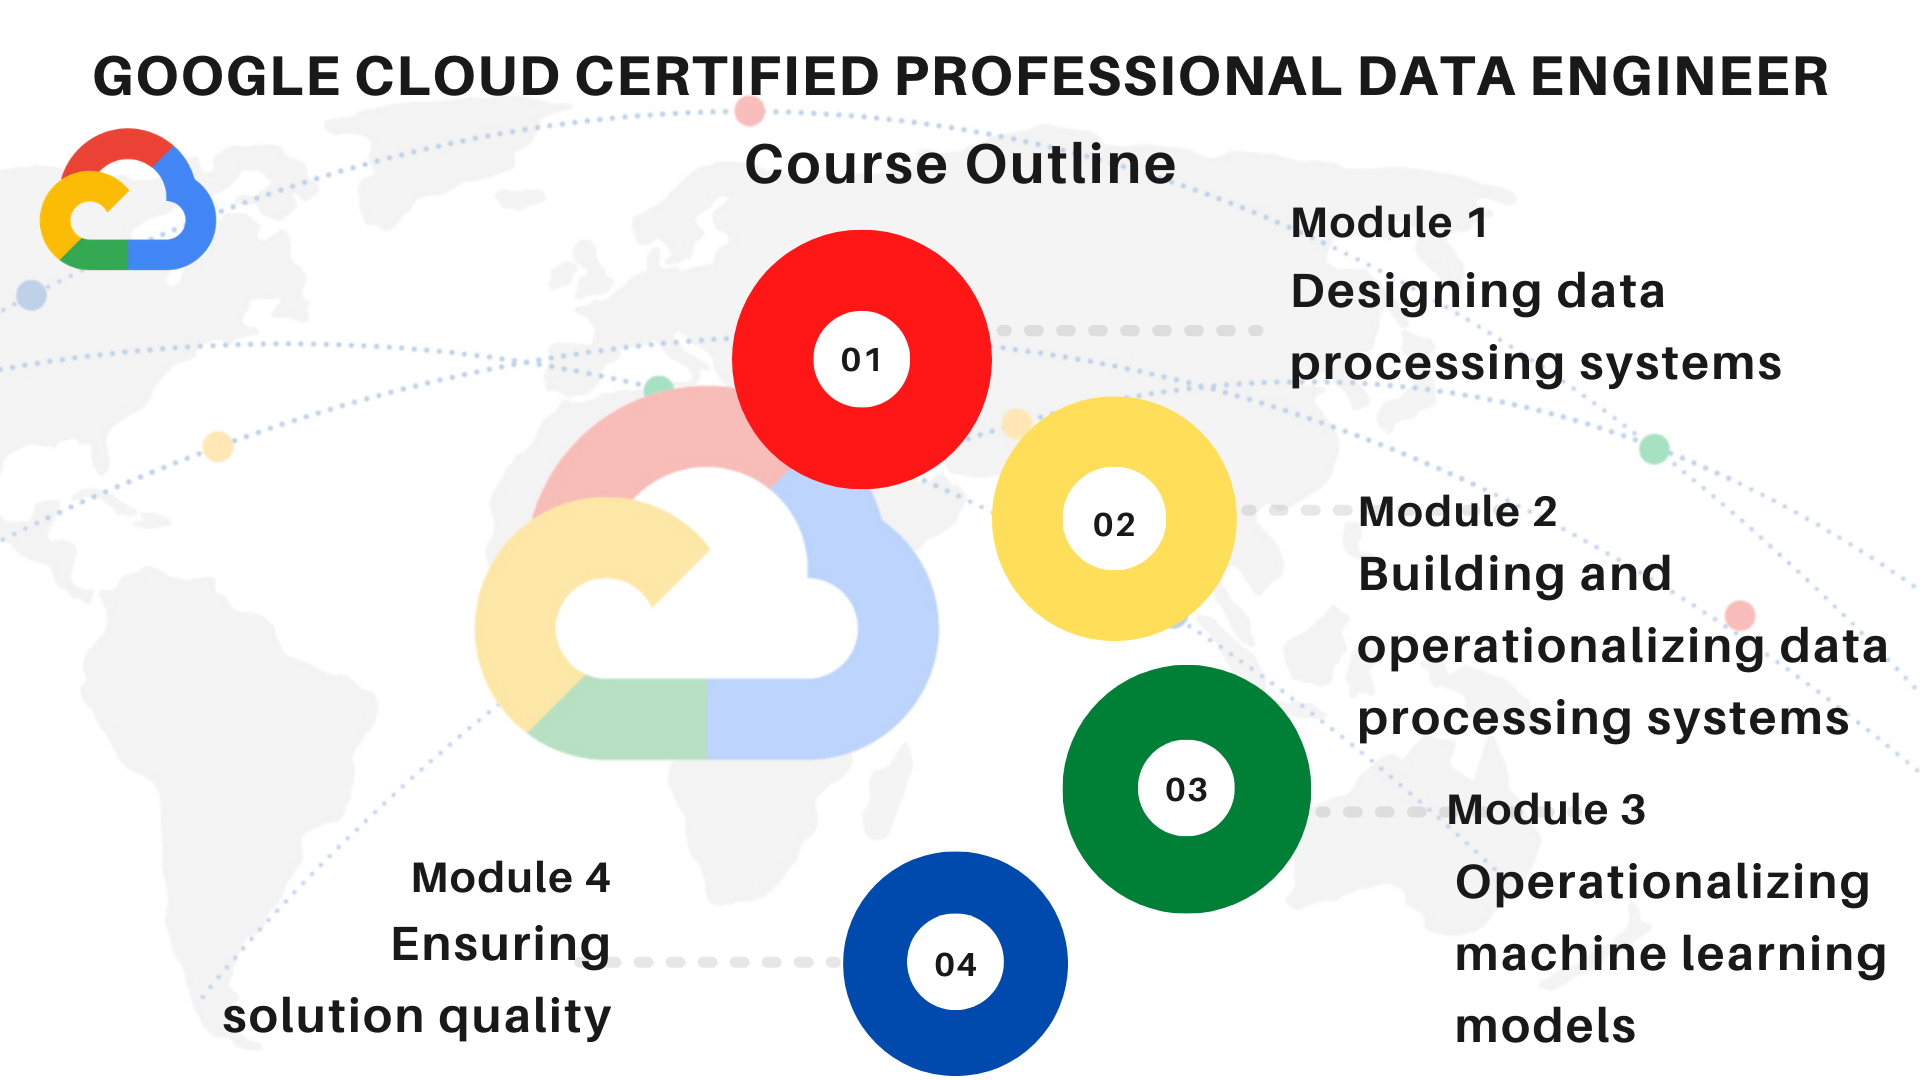 Professional-Cloud-Database-Engineer PDF